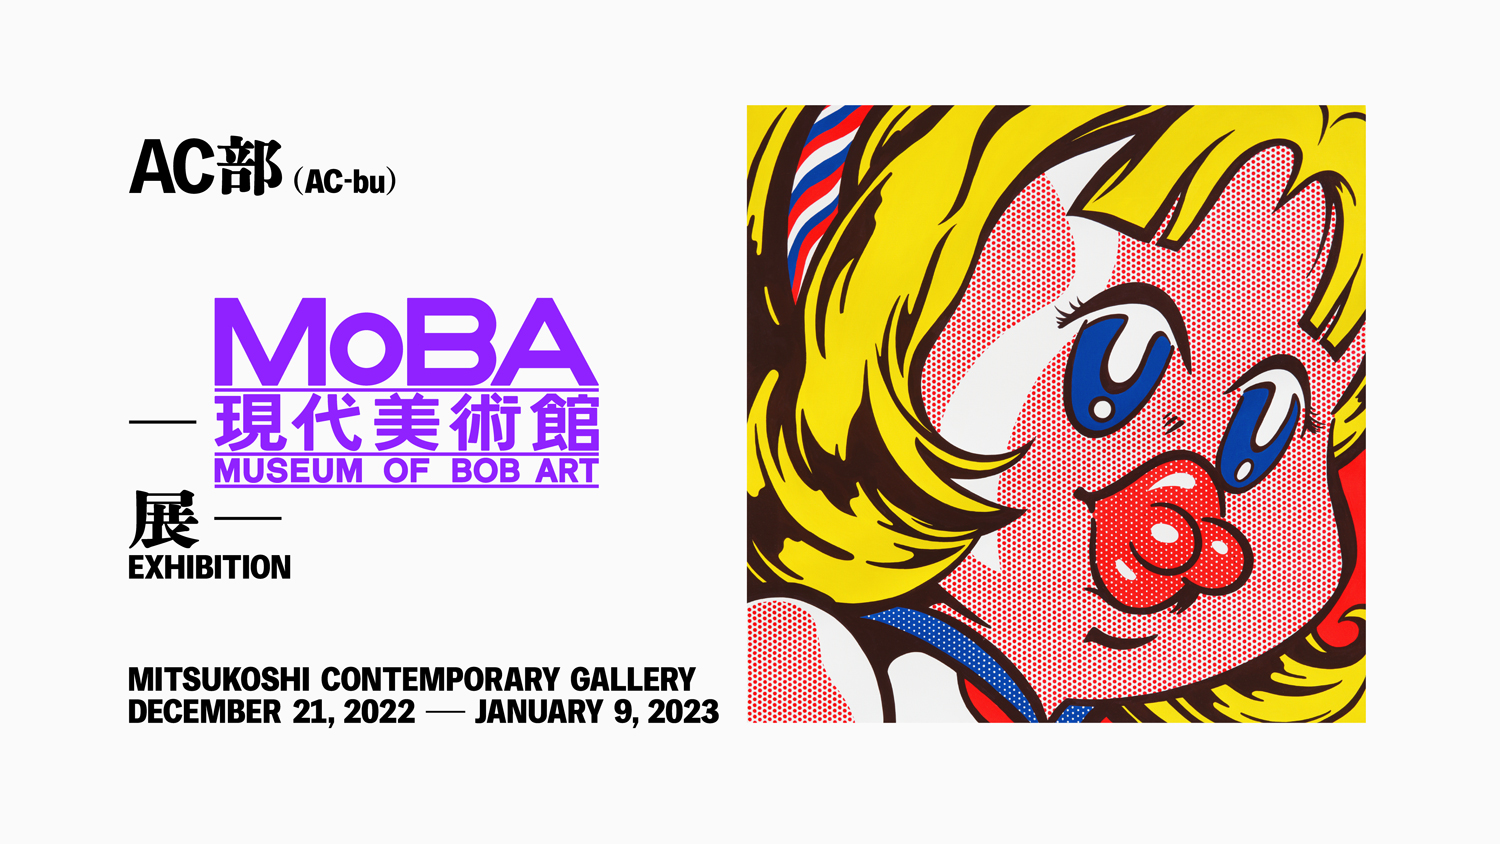 AC-bu「MoBA -現代美術館展- Museum of BOB ART EXHIBITION」